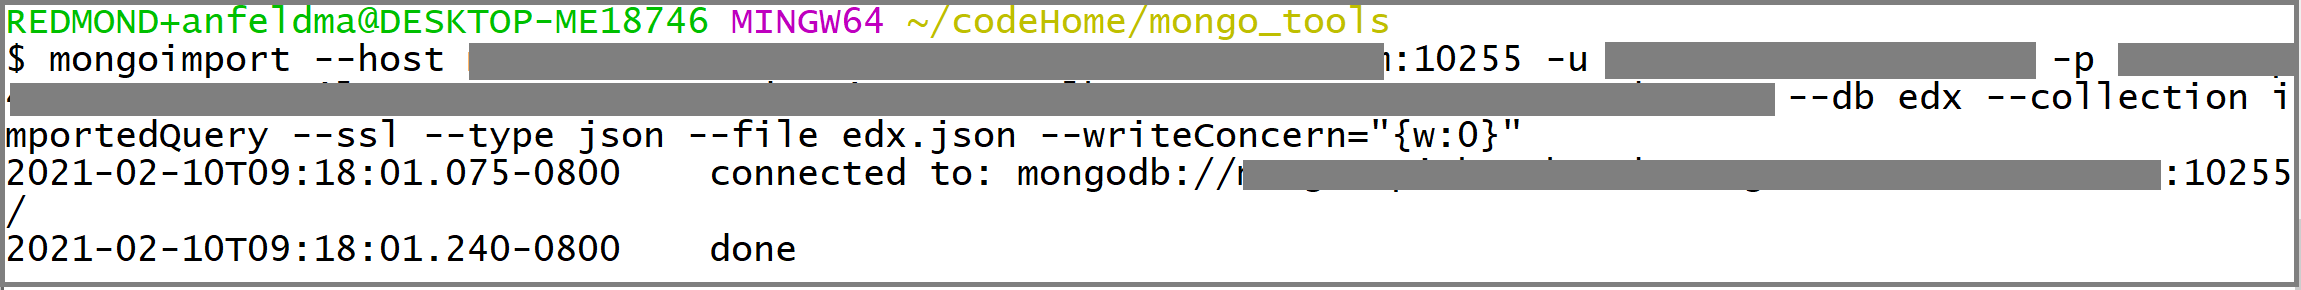 Screenshot of mongoimport call.